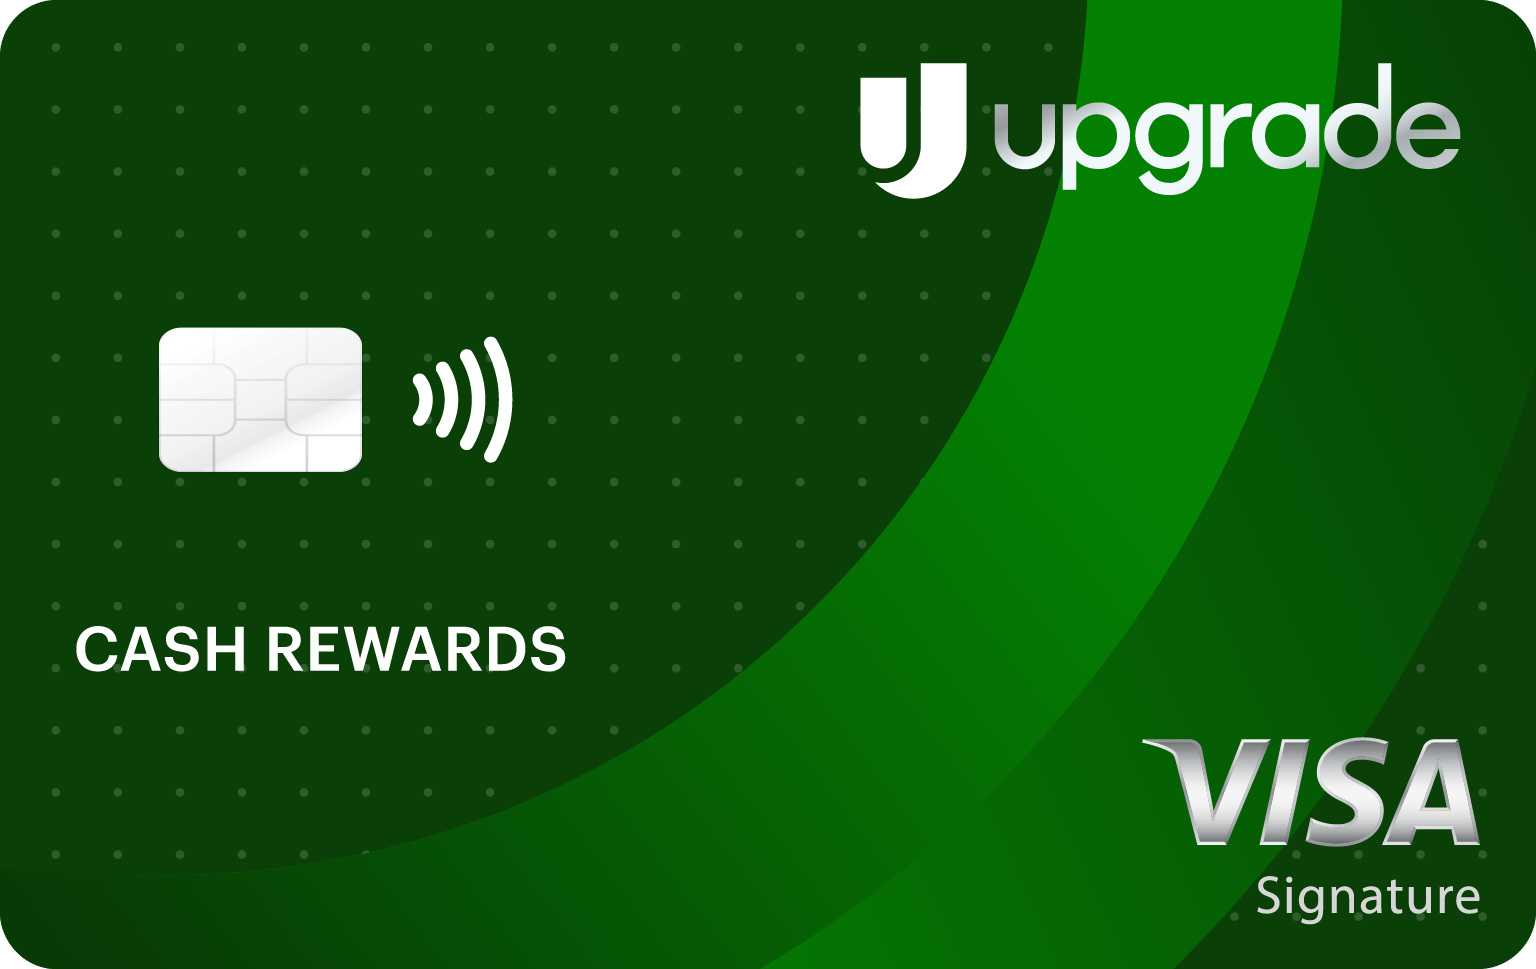 Upgrade Visa® Card with Cash Rewards